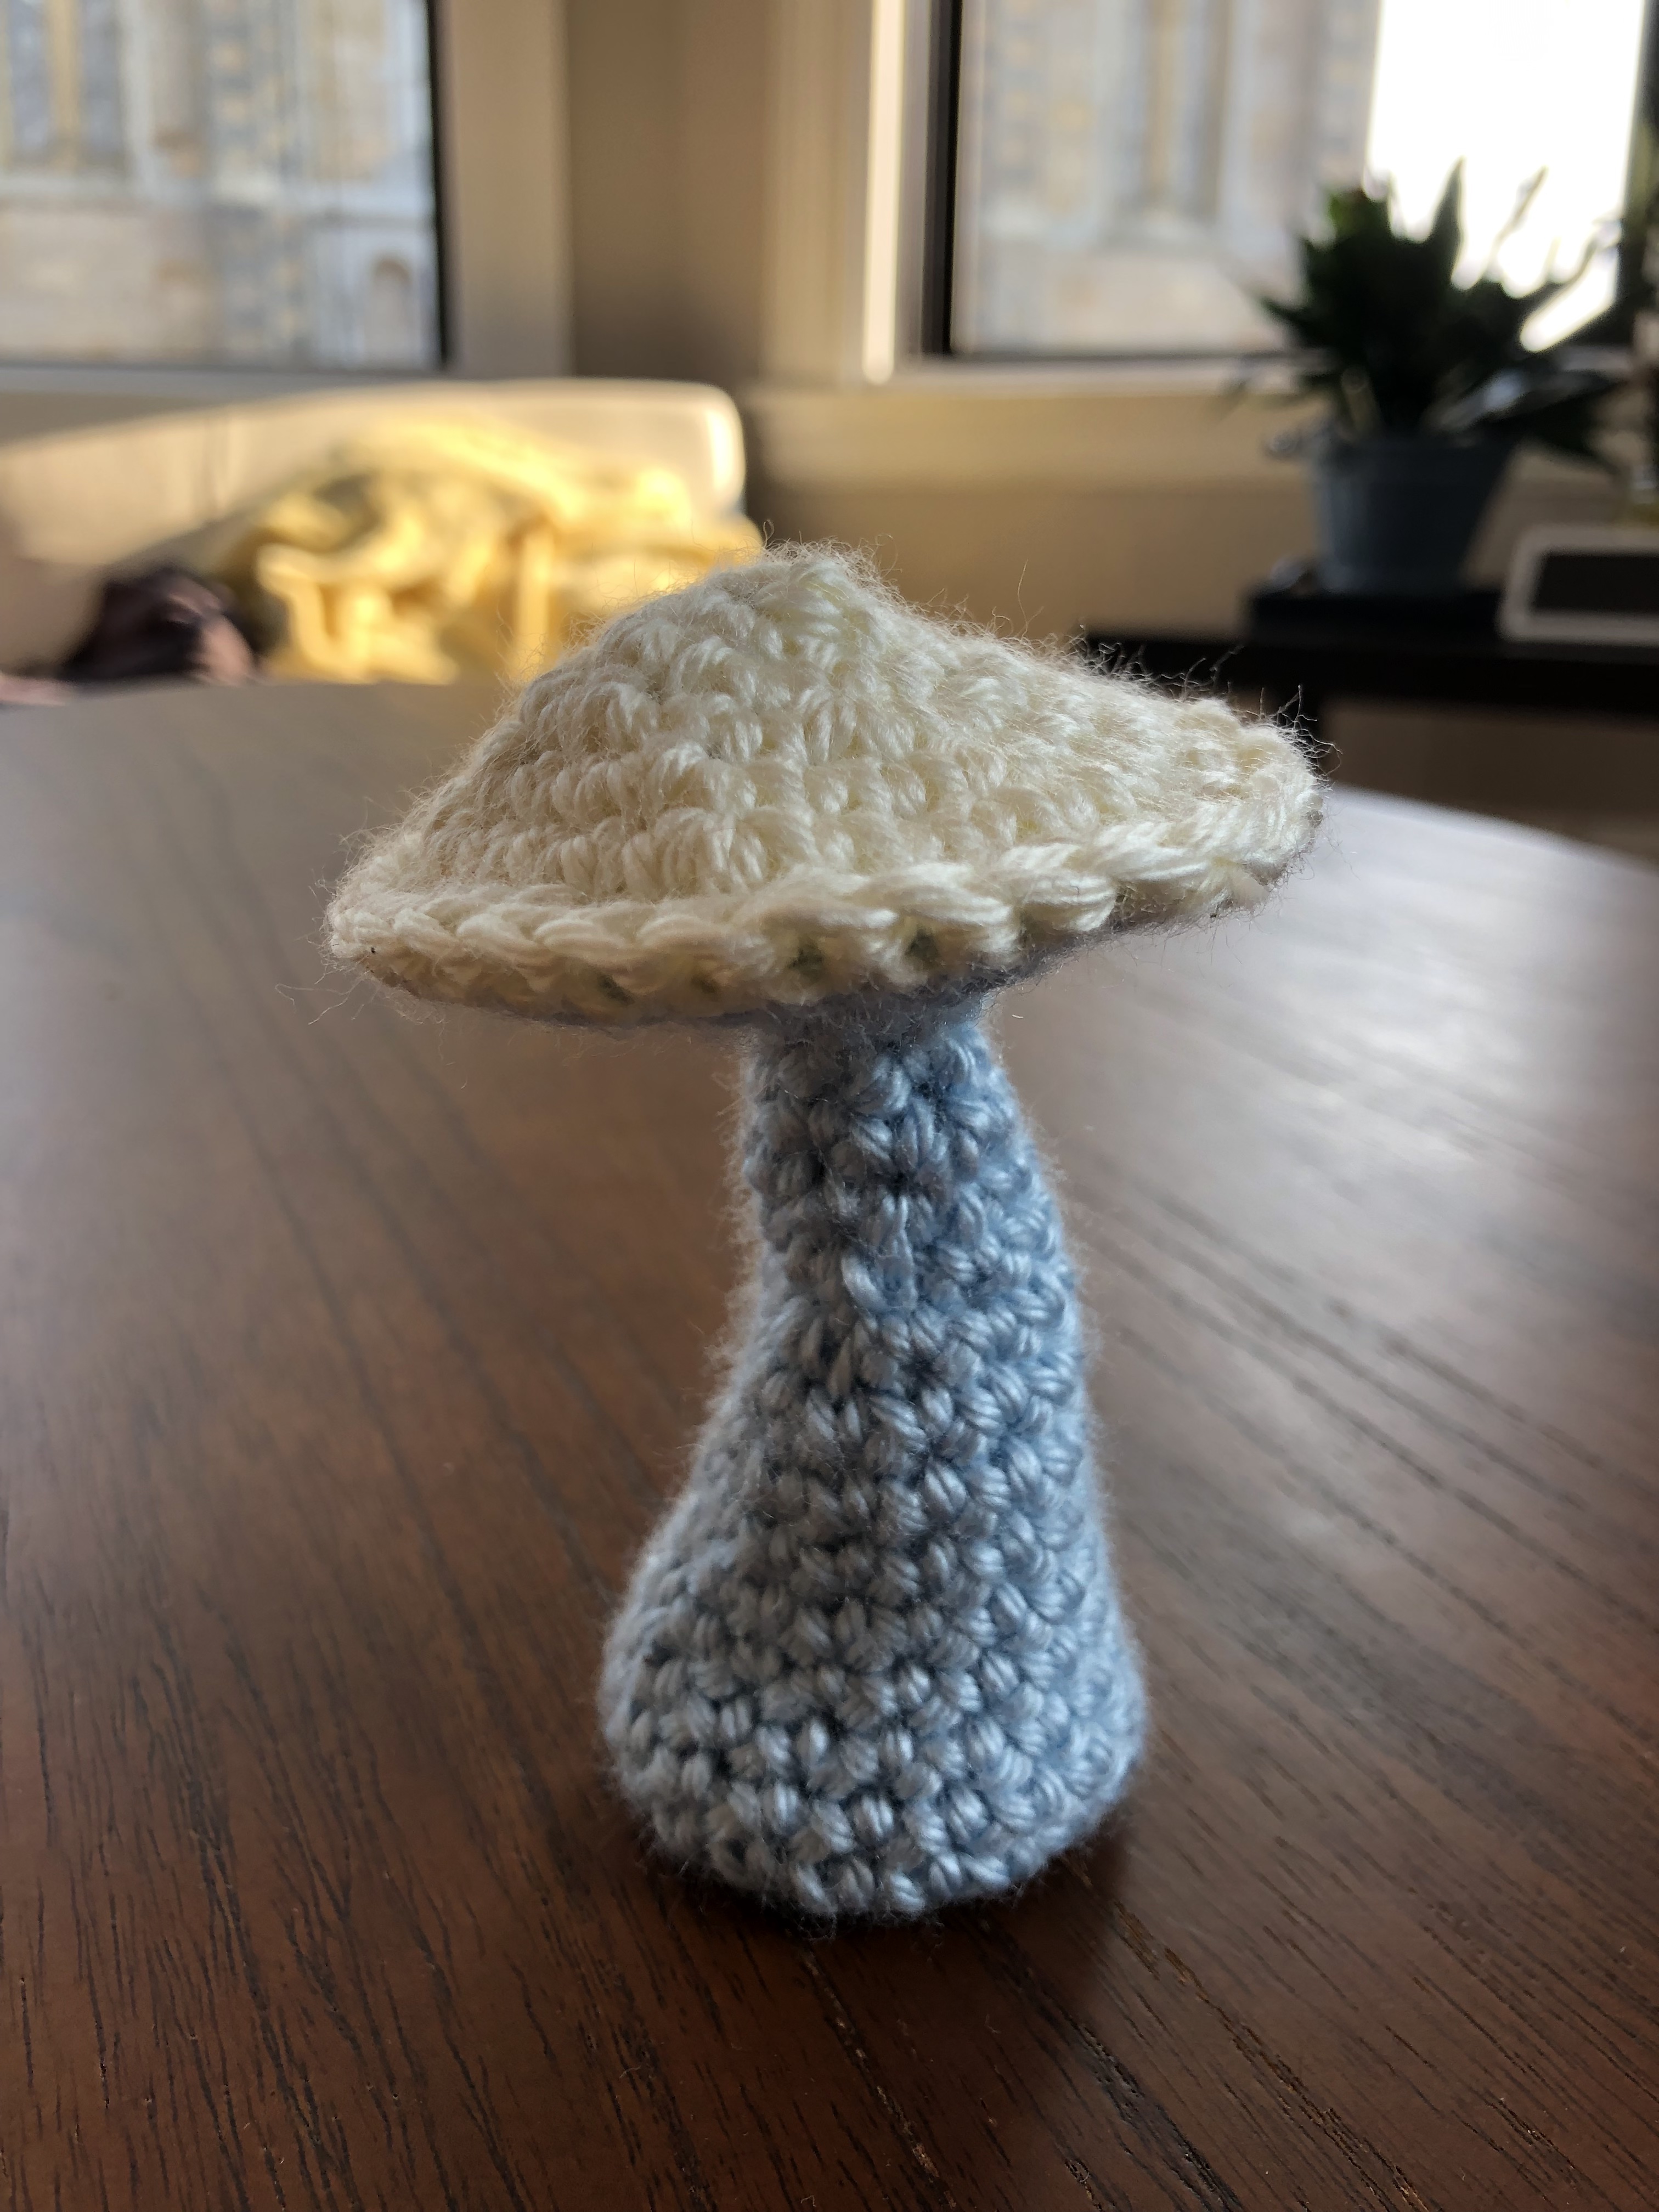 a mushroom with a white stem and blue base